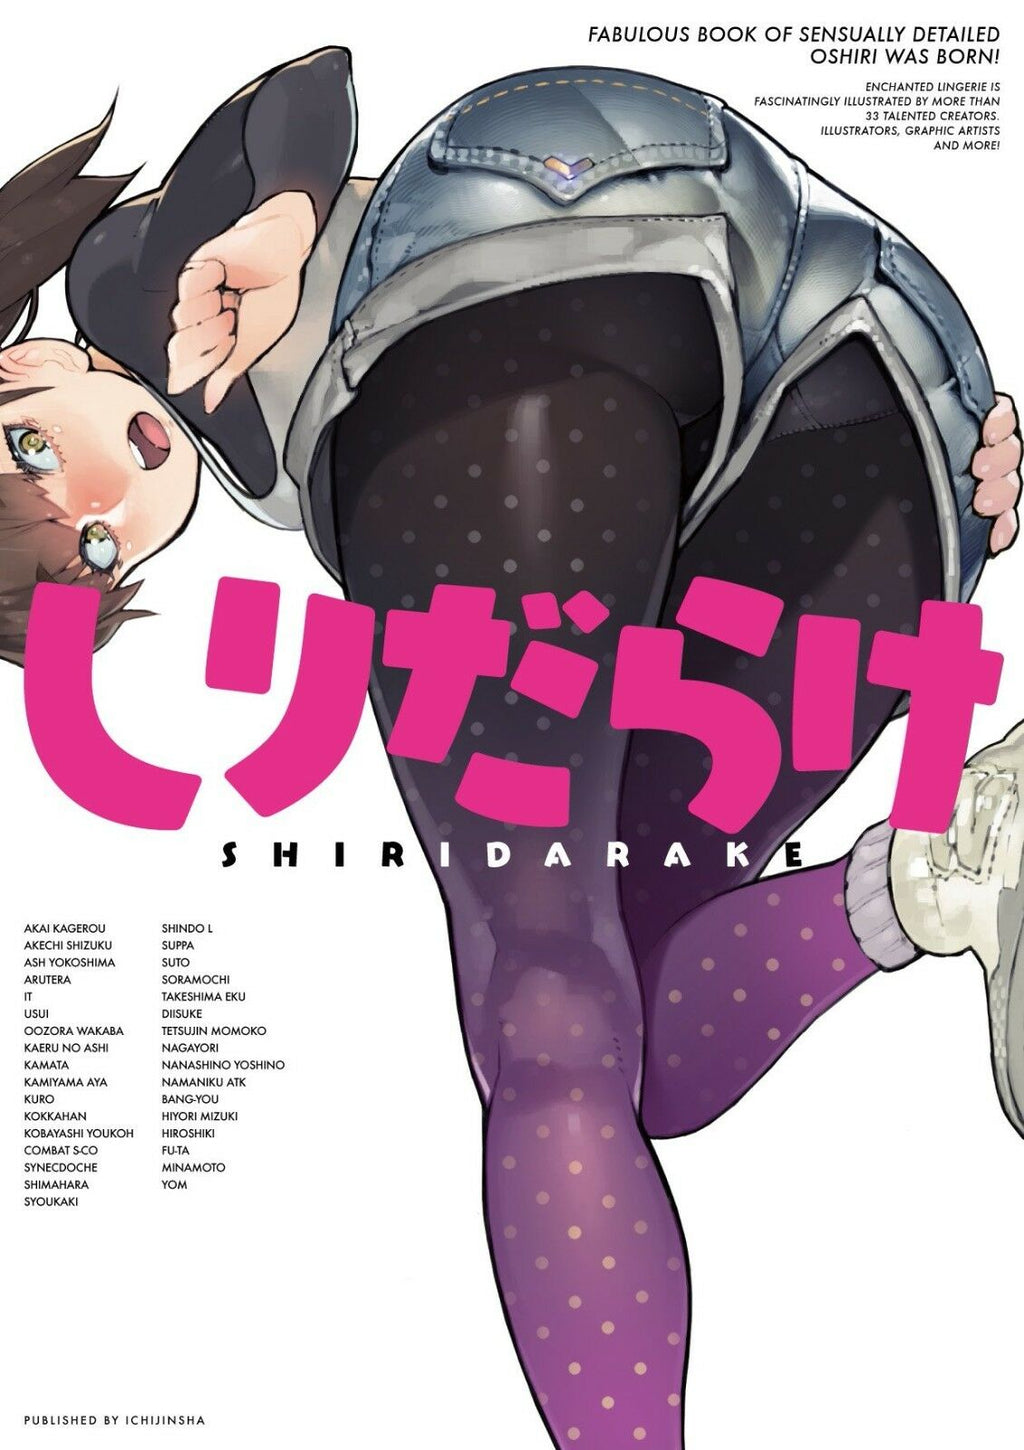 NEW Hip Illustration Art Book 'Shiridarake' | Japan Various Artists Anime